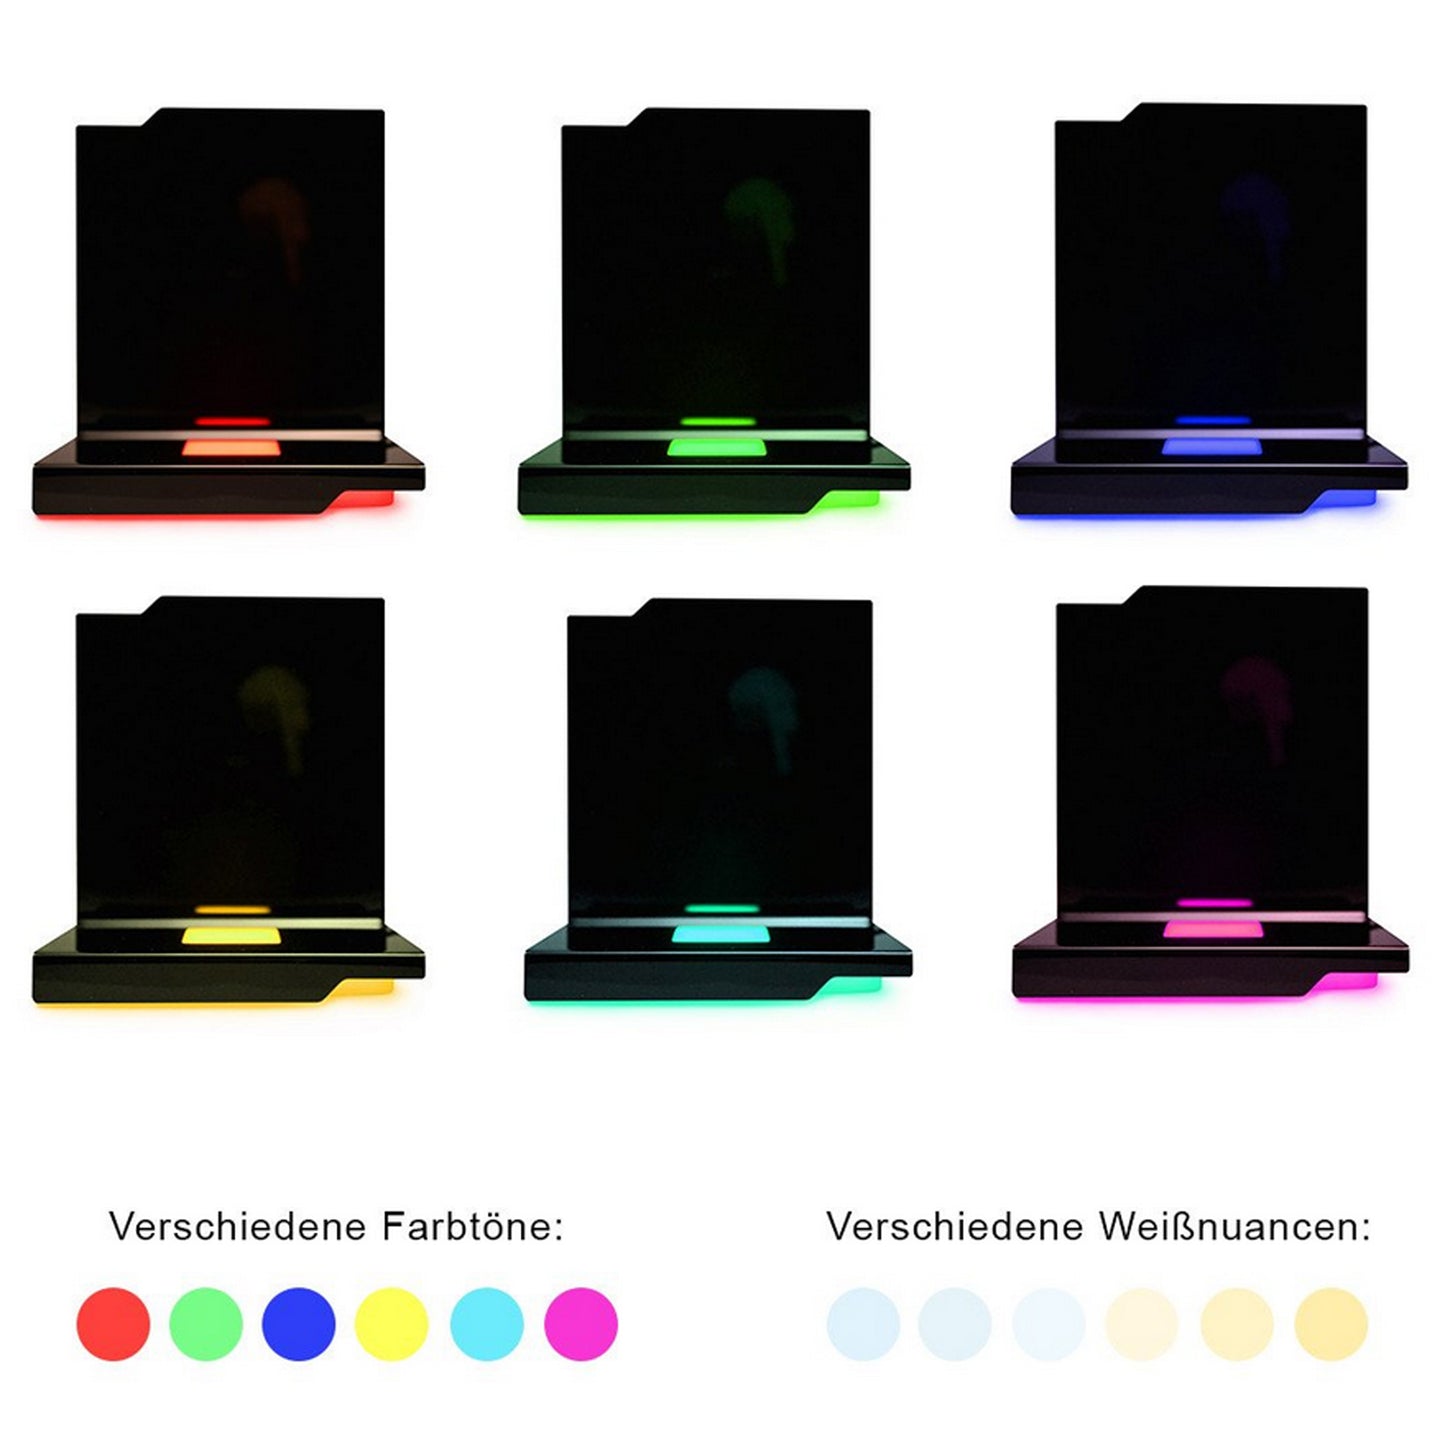 3D Fotos in Glas - Eisberg XL mit Ouvertüre Beleuchtungselement